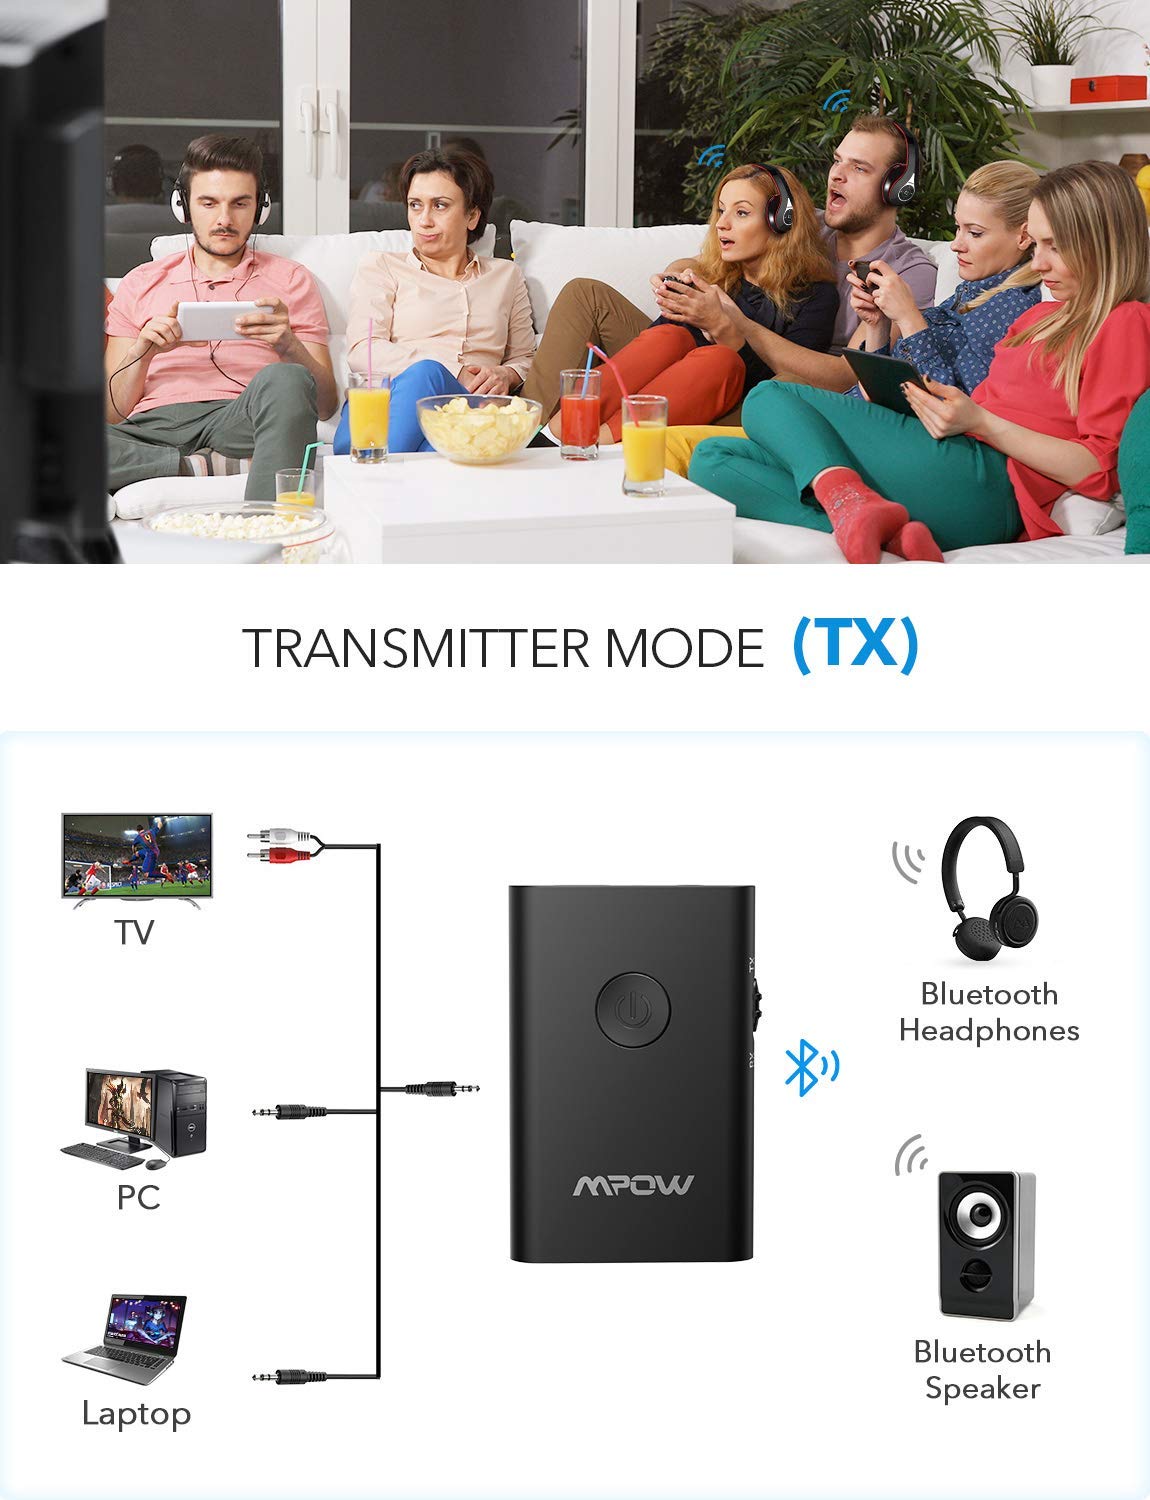 Transmisor Bluetooth para TV Streambot Pro Mpow